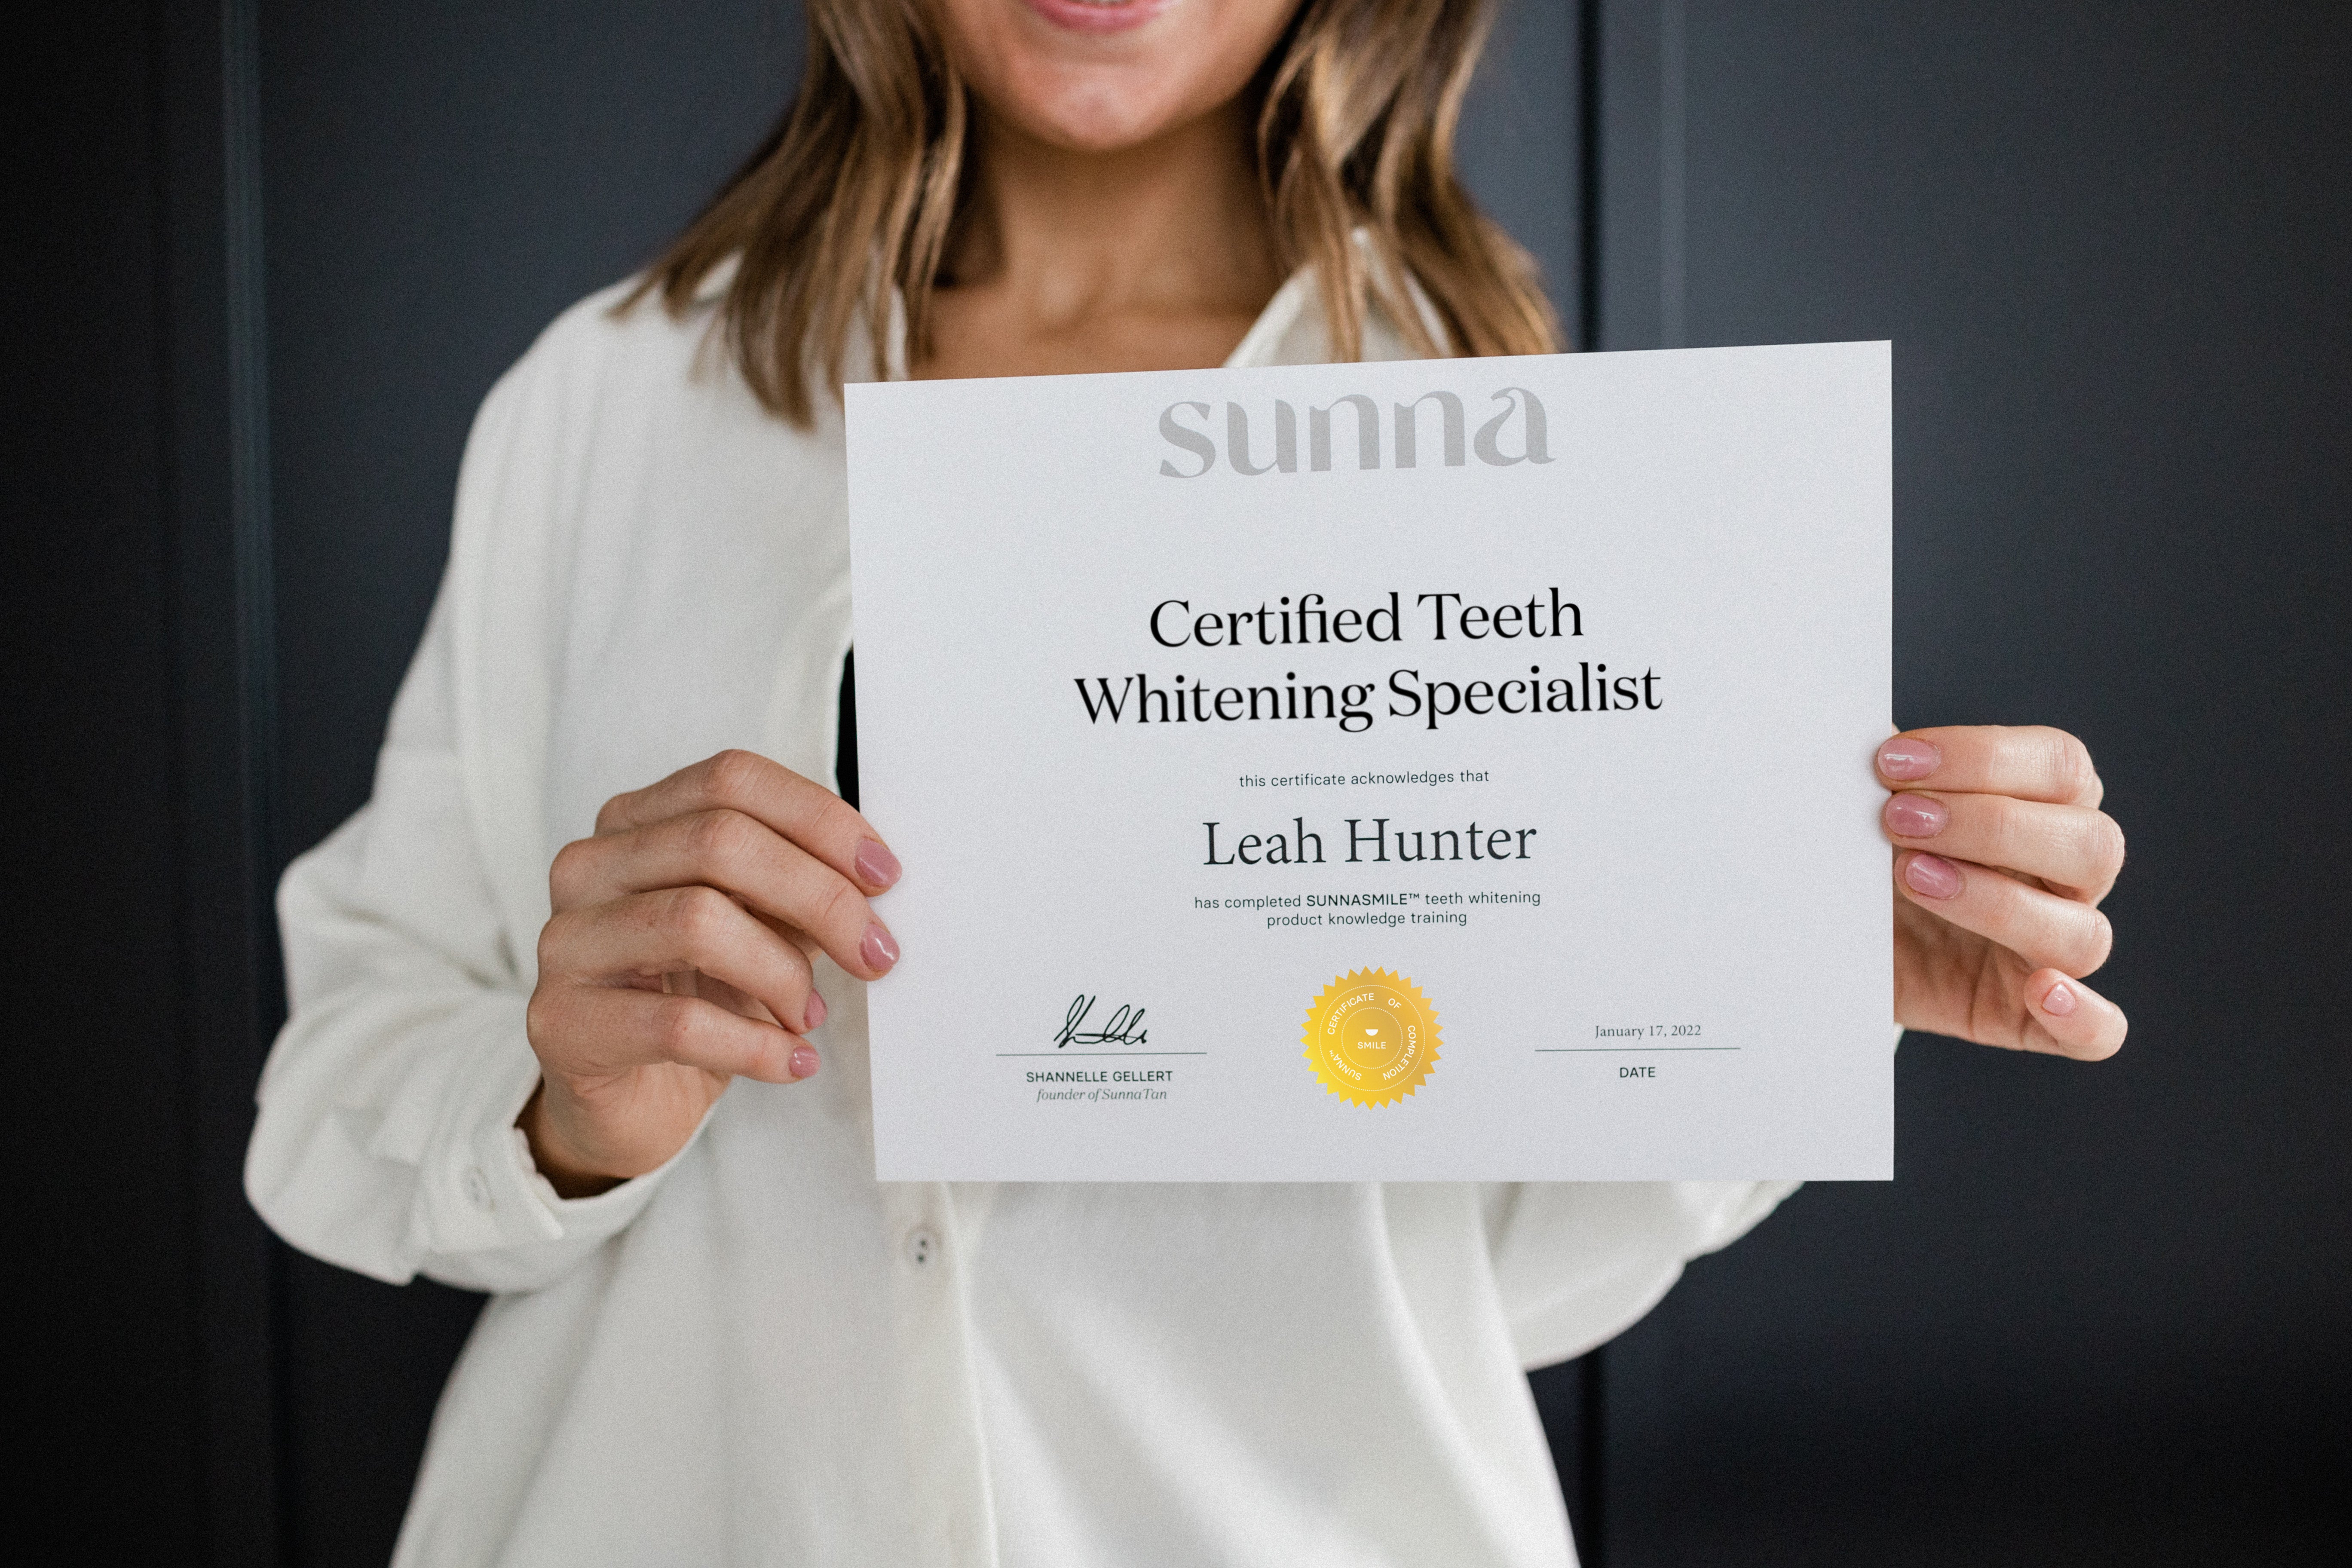 SunnaSmile Teeth Whitening Specialist Training and Certification